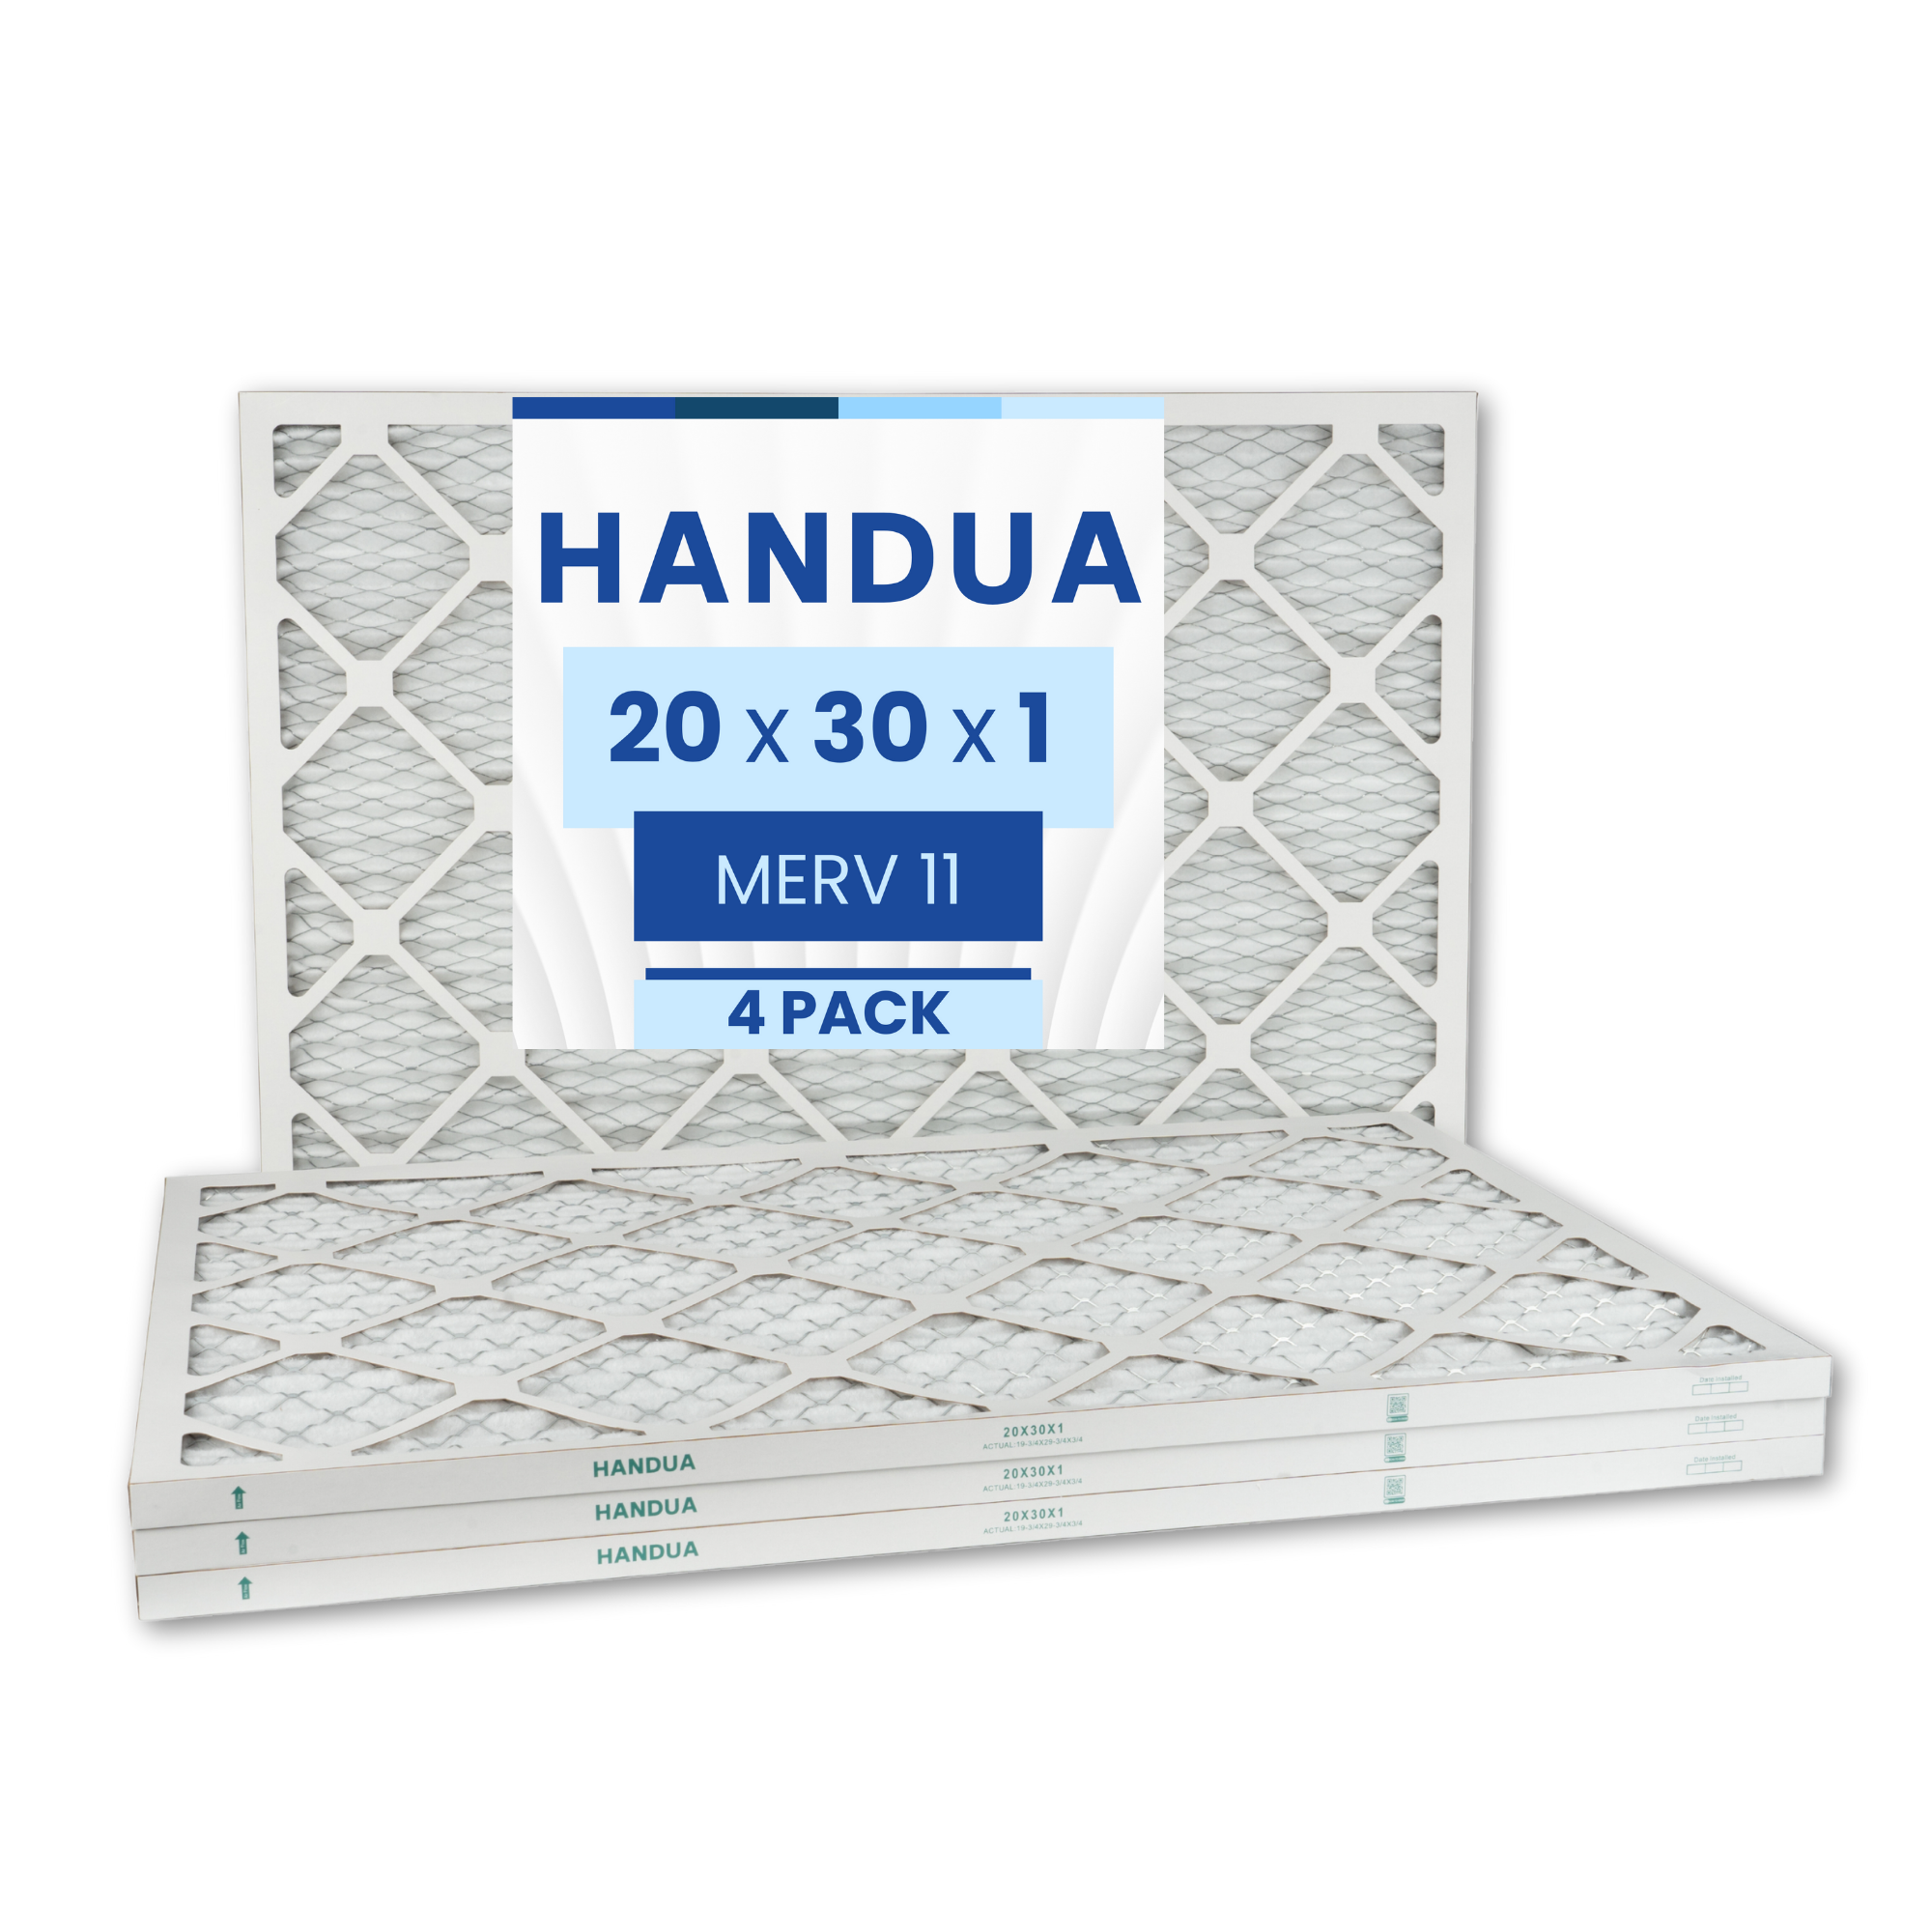 Handua 20x30x1 Air Filter MERV 11 Allergen Control, Plated Furnace AC Air Replacement Filter, 4 Pack (Actual Size: 19.75" x 29.75" x 0.75")